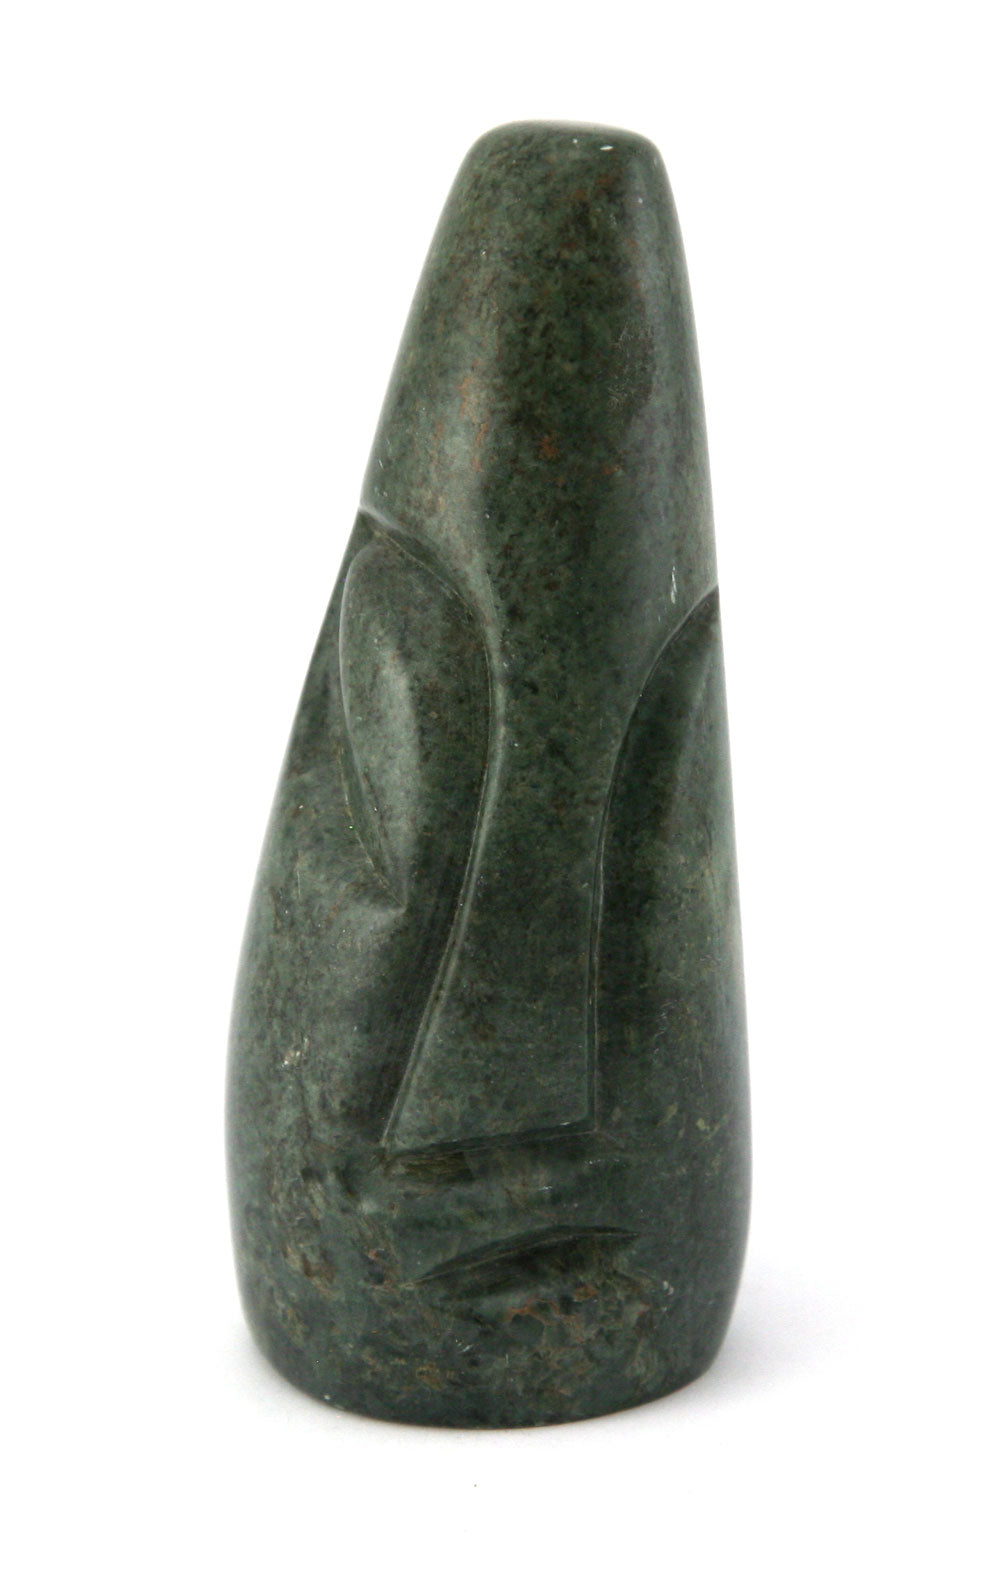 Vanassa Rangisse - Shona Stone Carving (M1567)